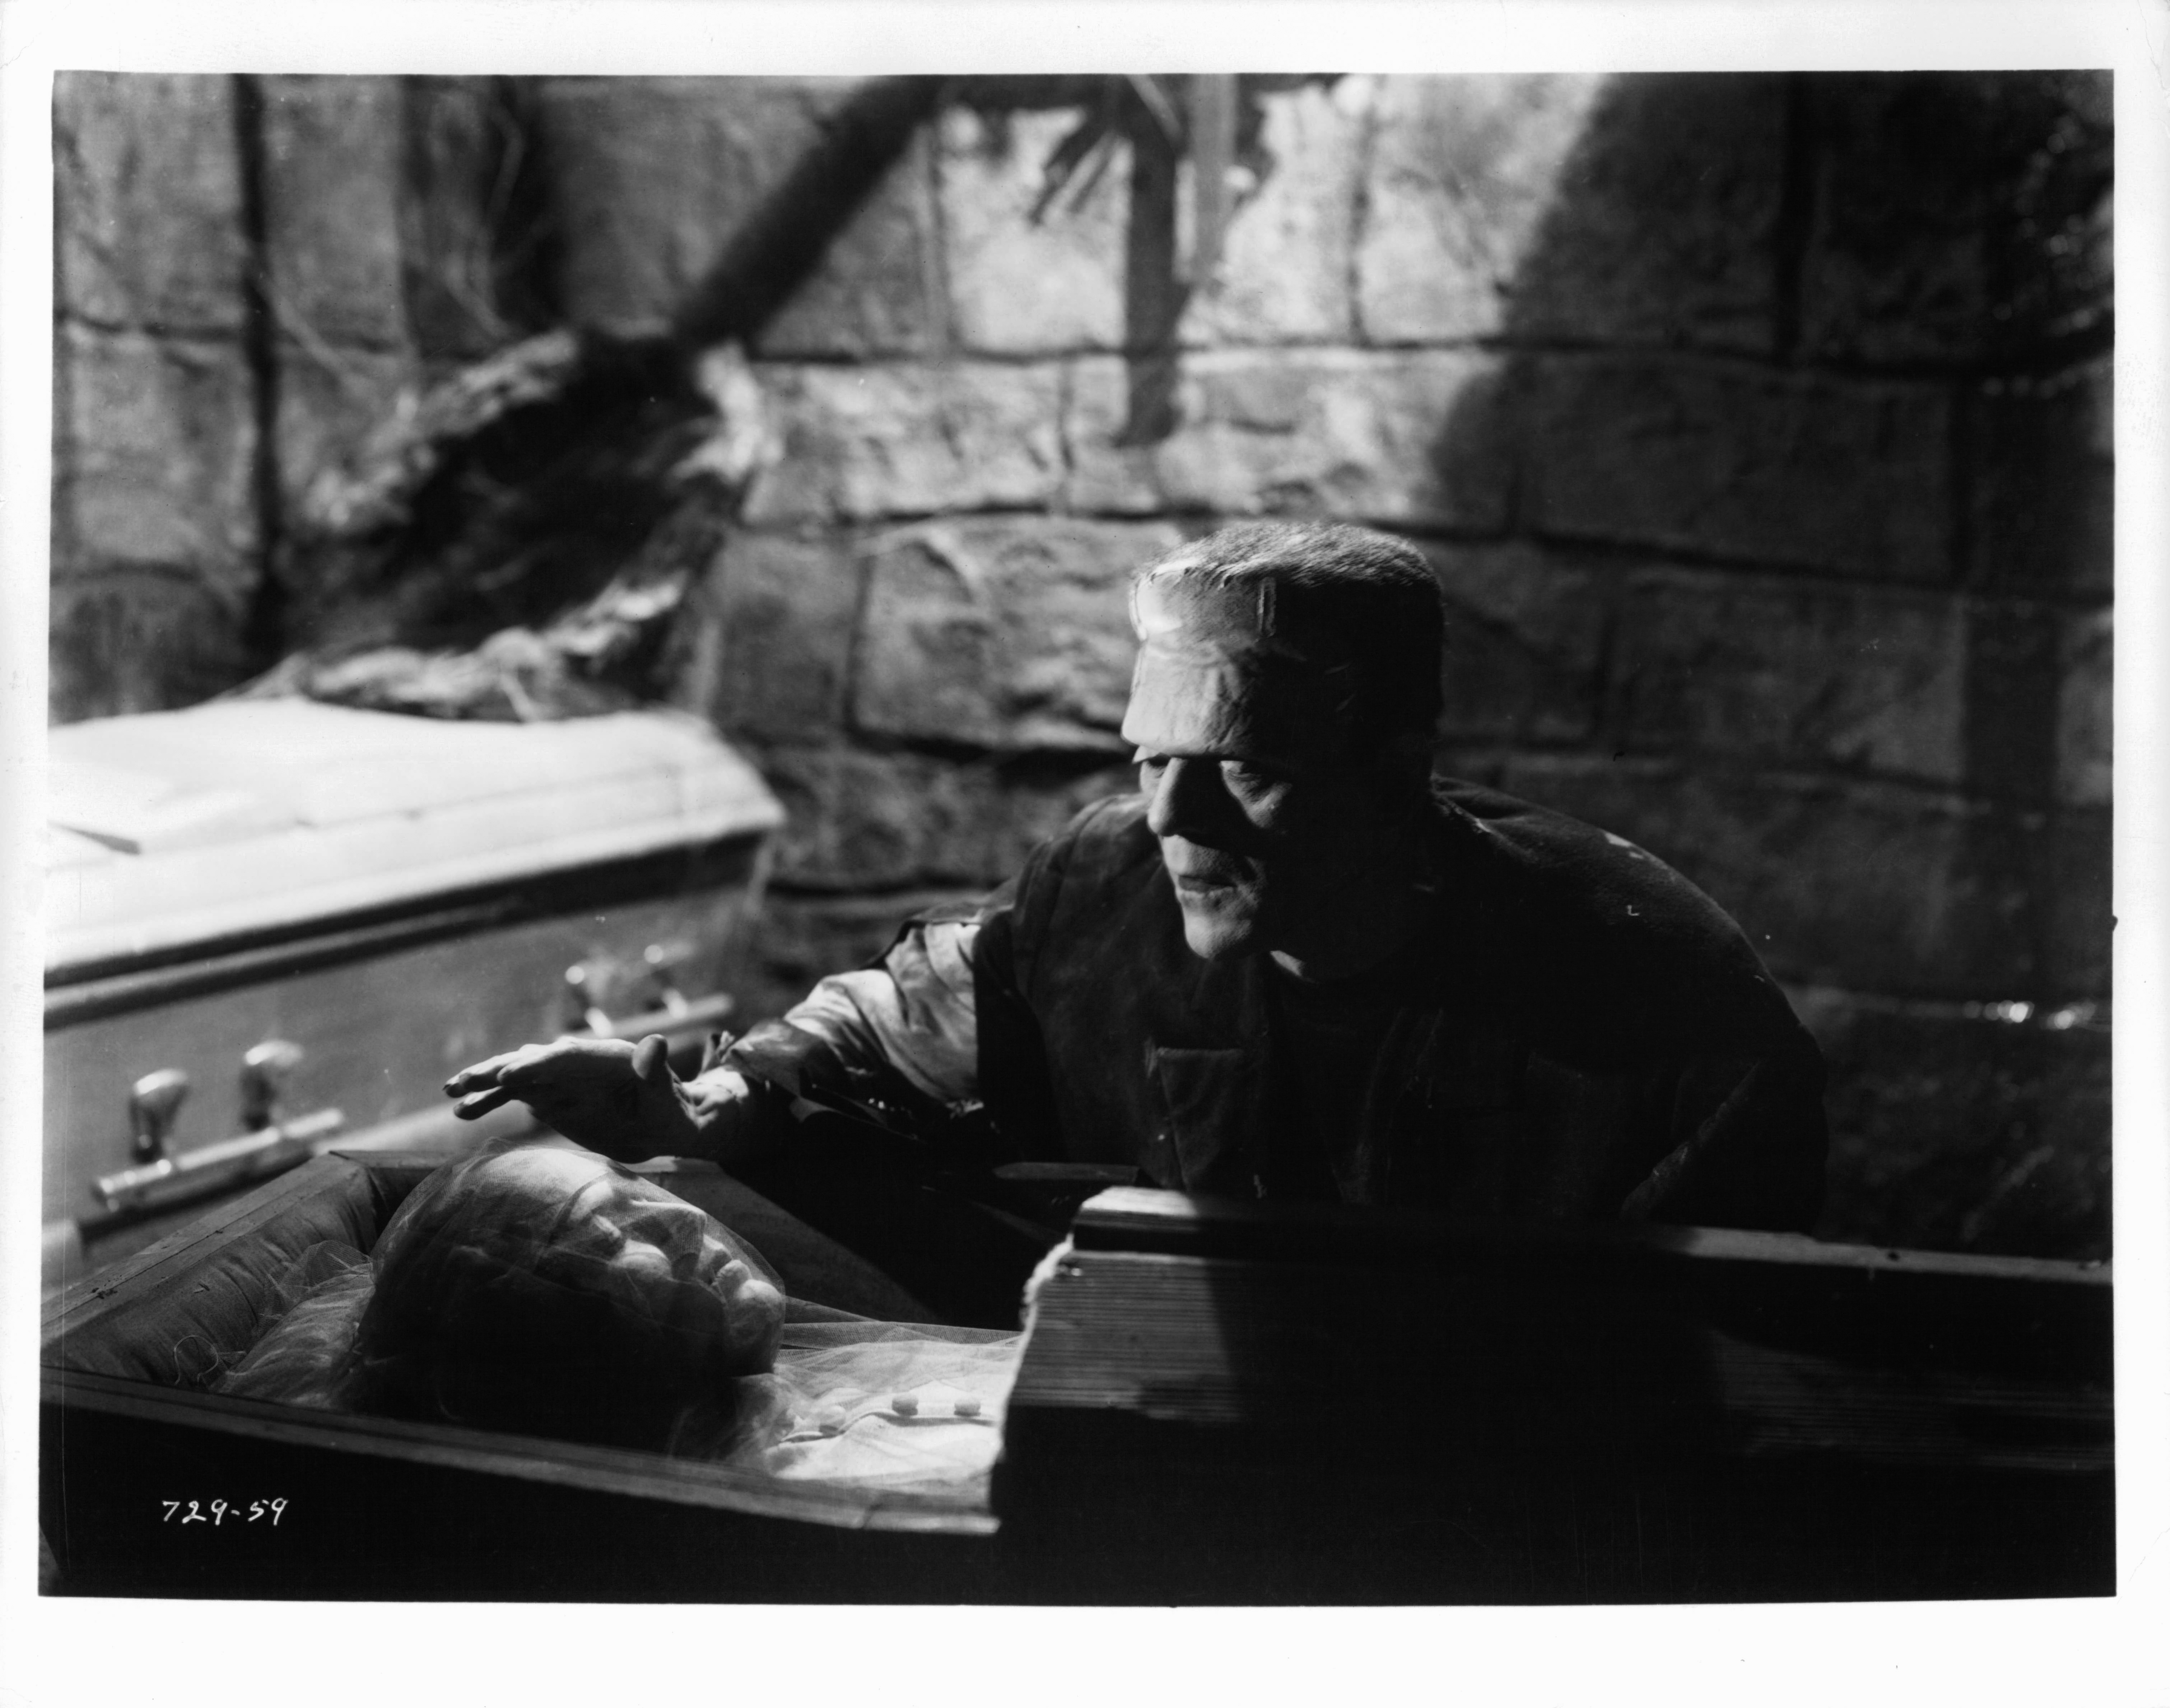 Still of Boris Karloff and Elsa Lanchester in Bride of Frankenstein (1935)